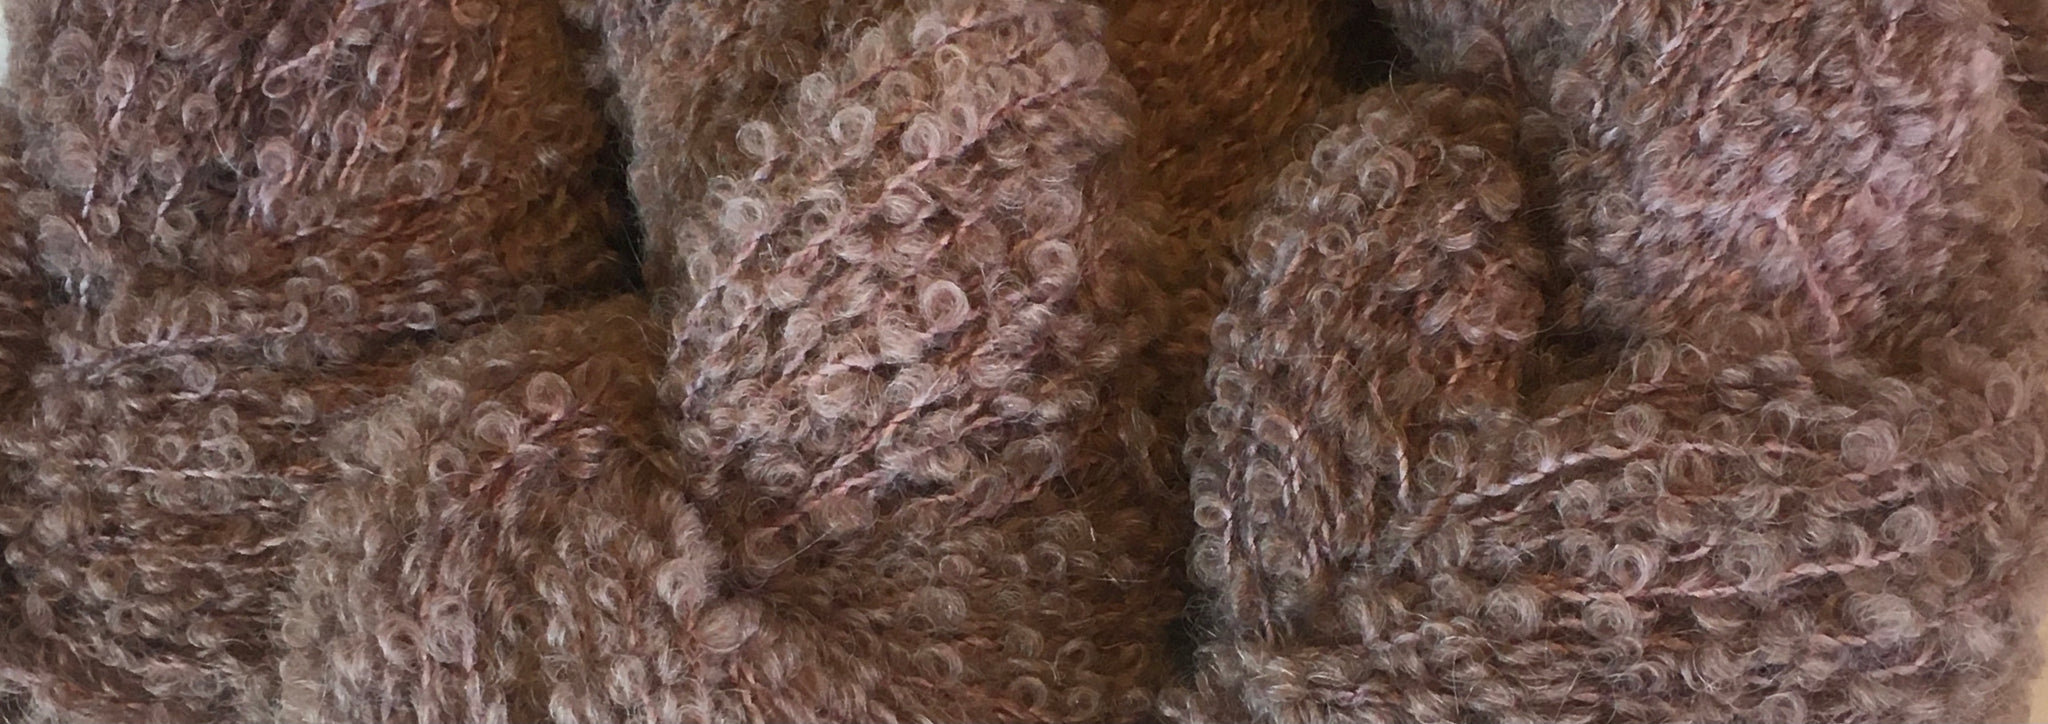 Thread Bear Needlepoint — Loop Knitting